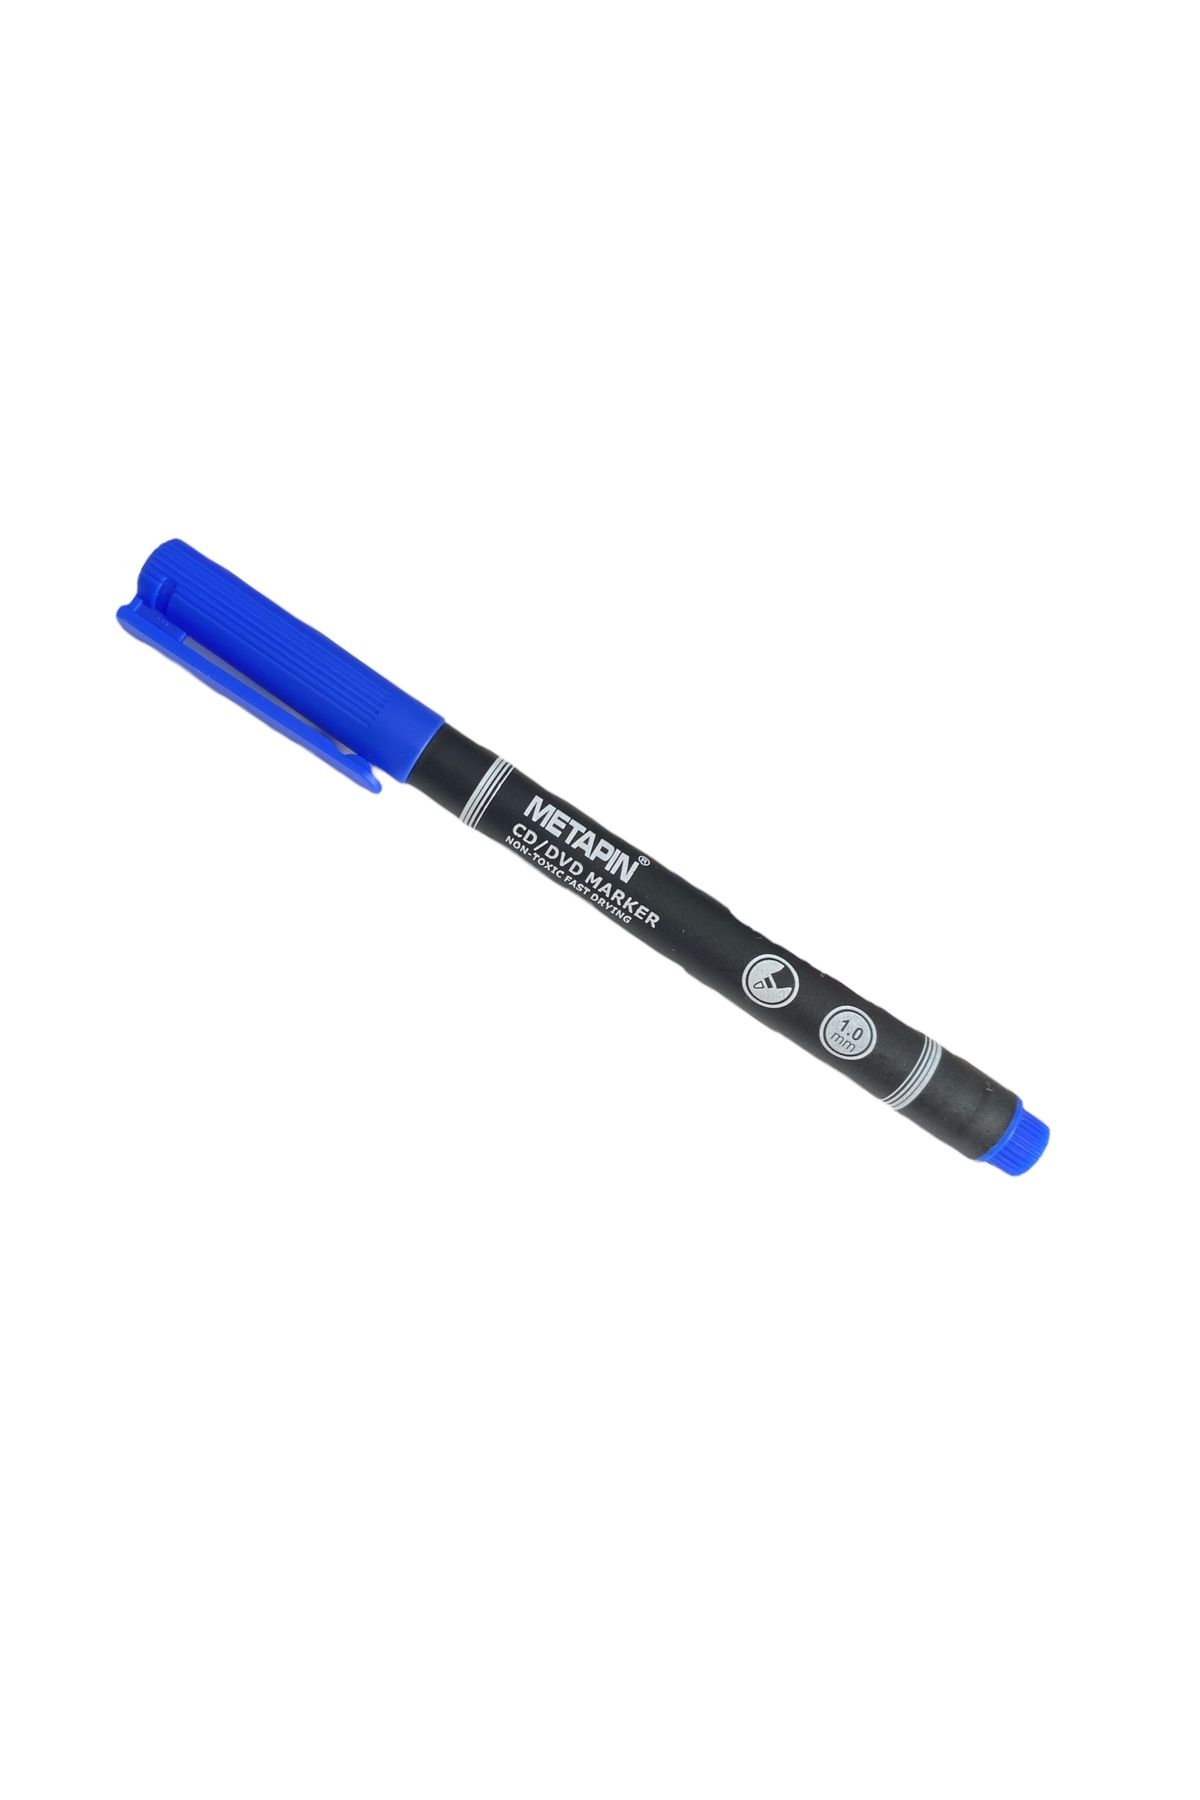 METAPİN Metapin Marker Asetat Kalemi 1.0 Mm ( M )- Mavi